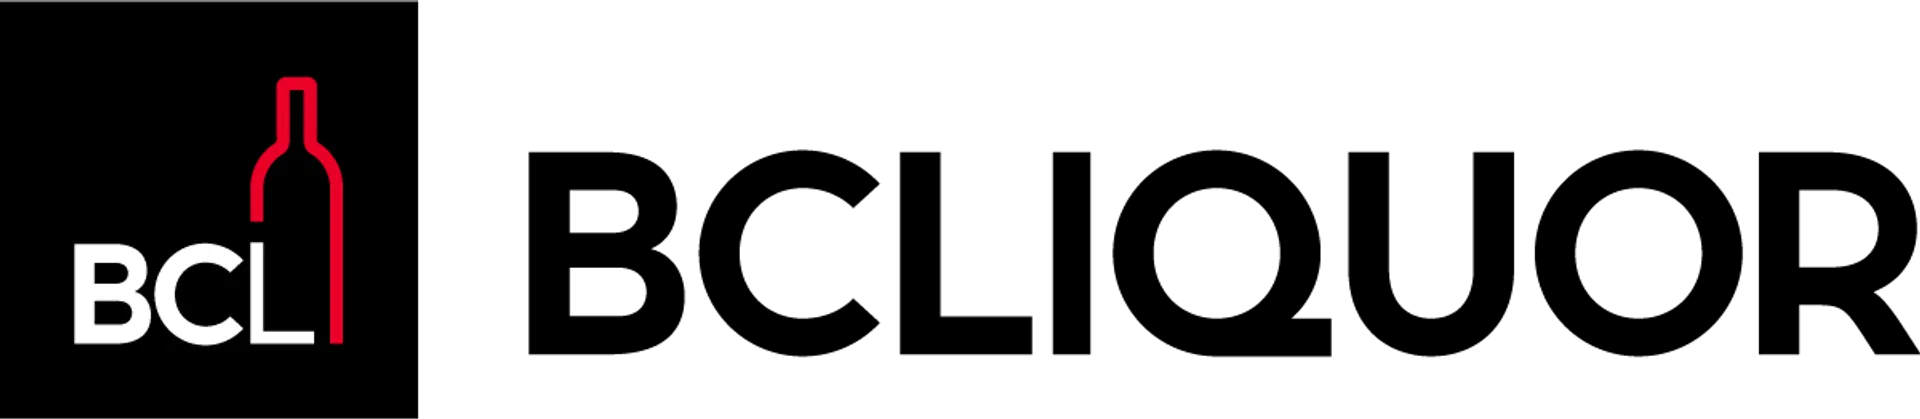 BC LIQUOR STORES logo